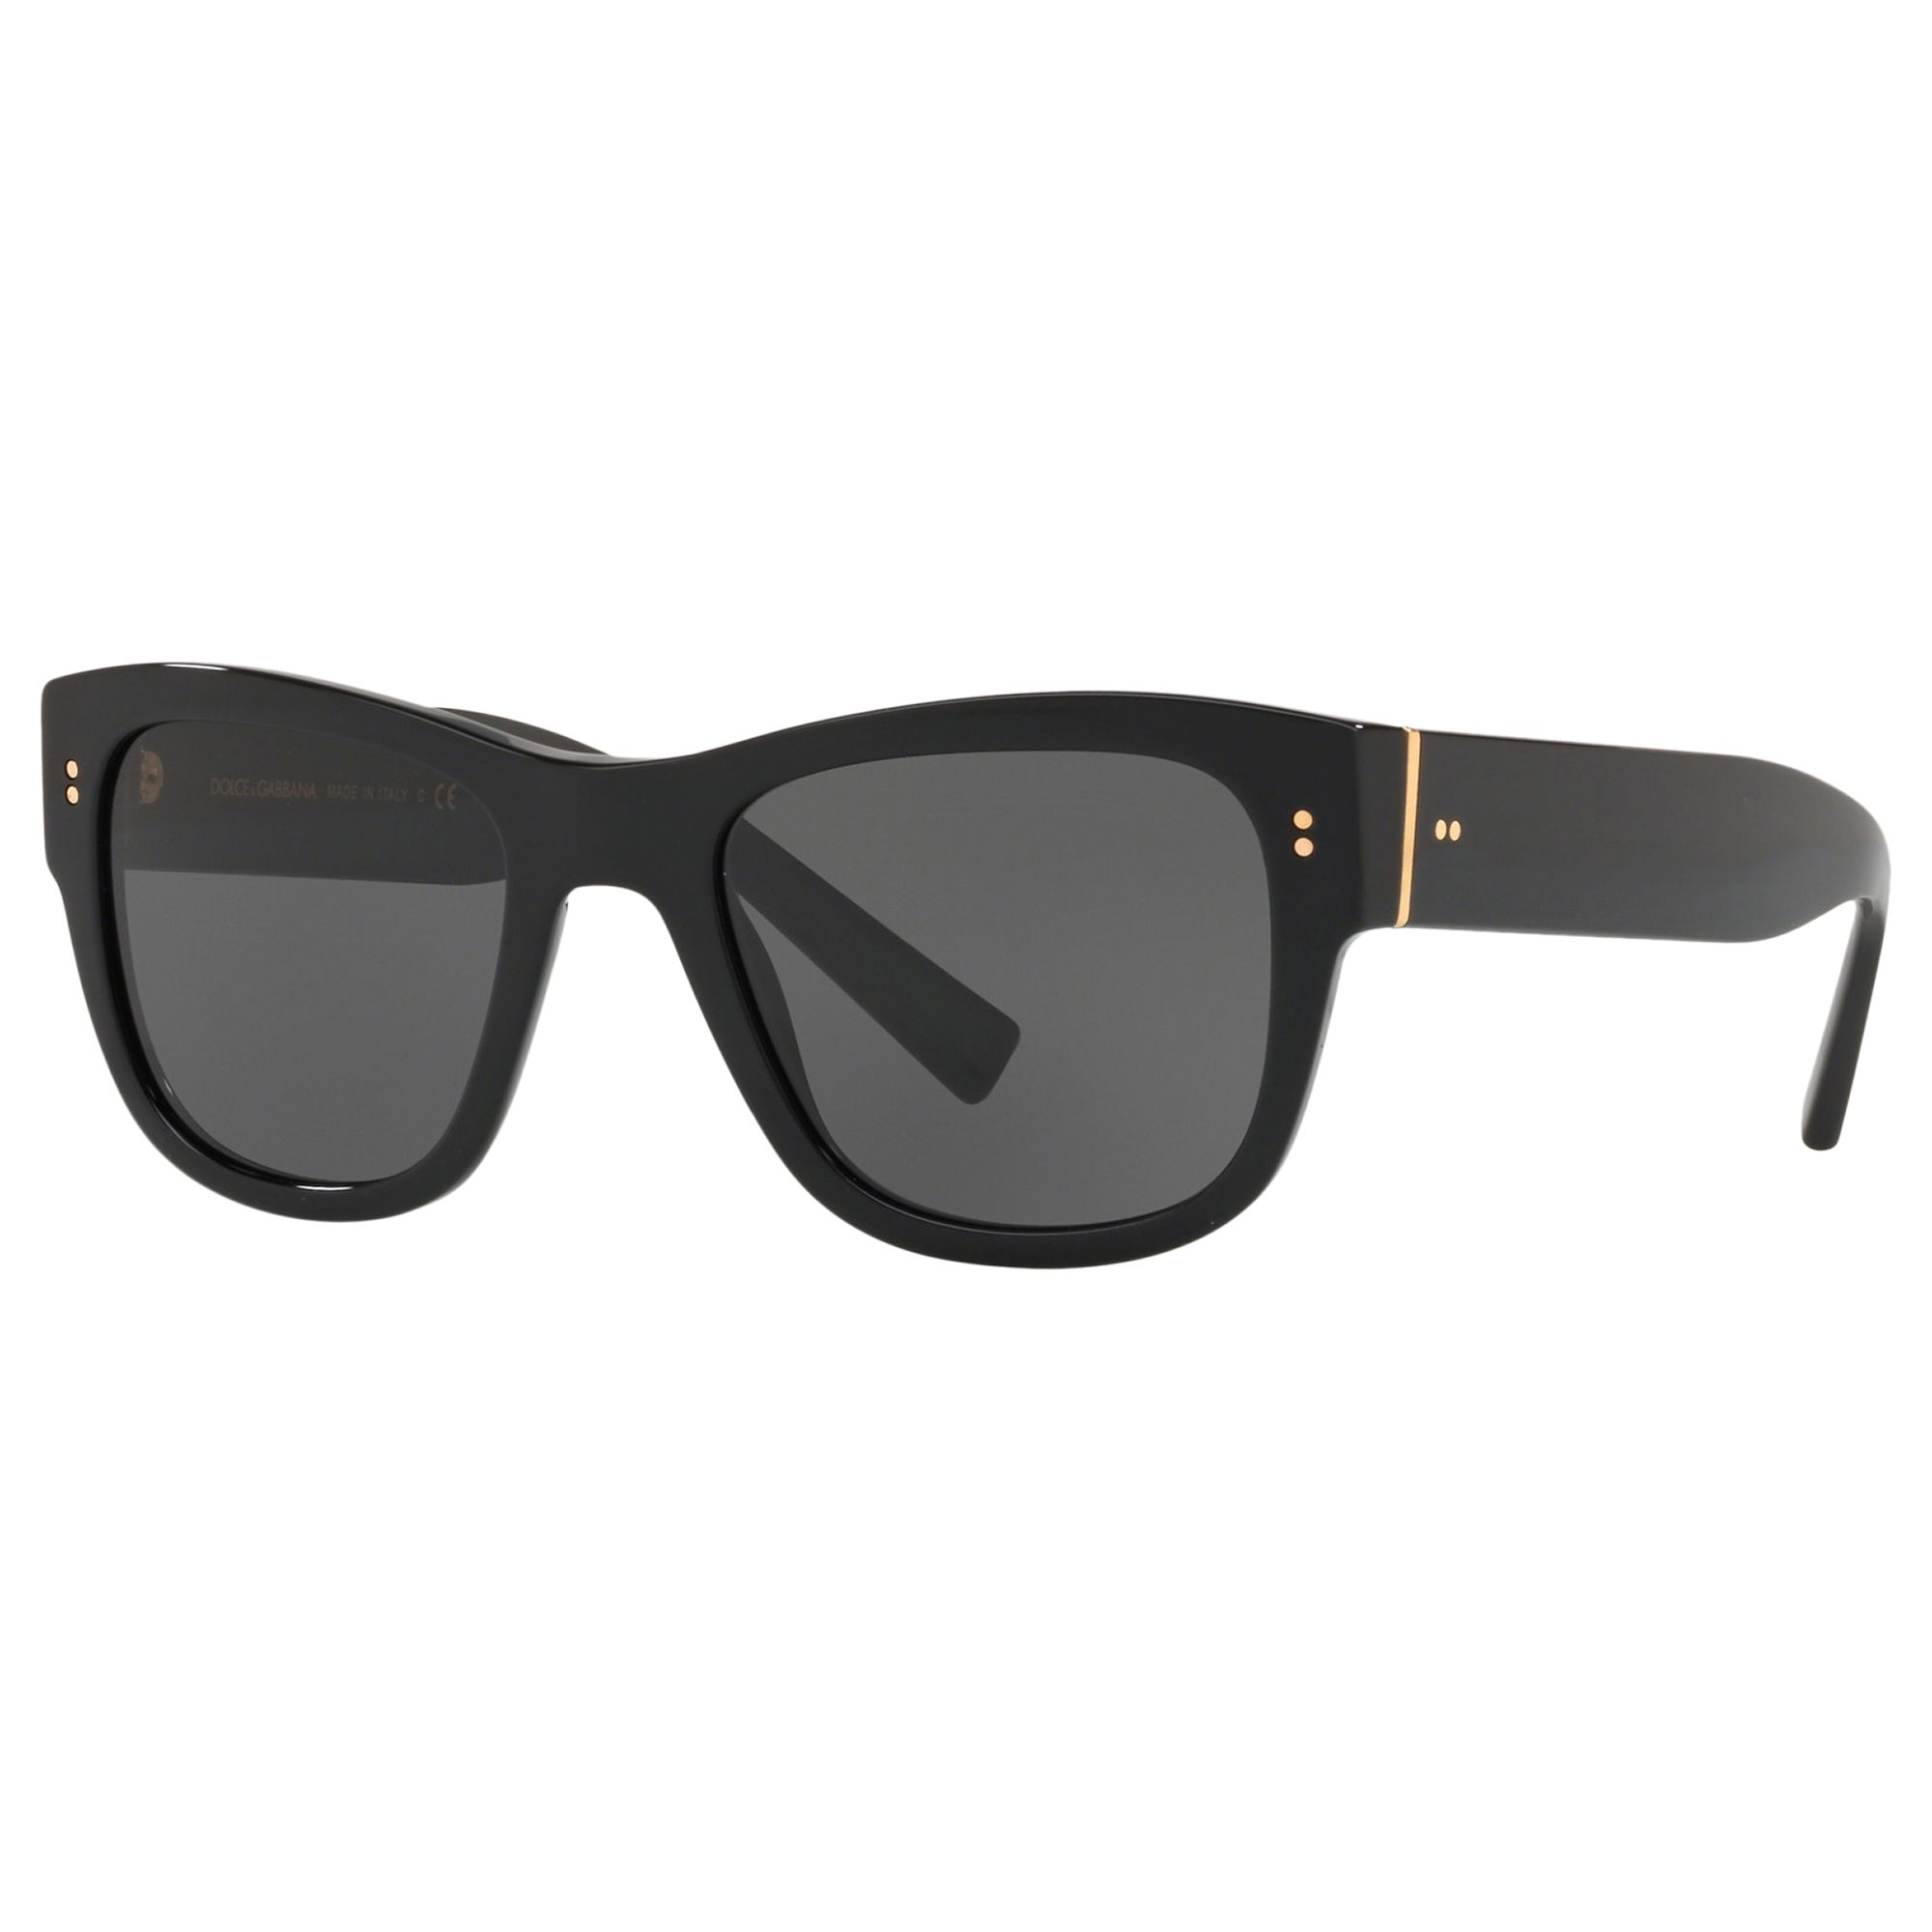 Dolce & Gabbana DG4338 Men's Square Frame Sunglasses, Black/Grey at ...